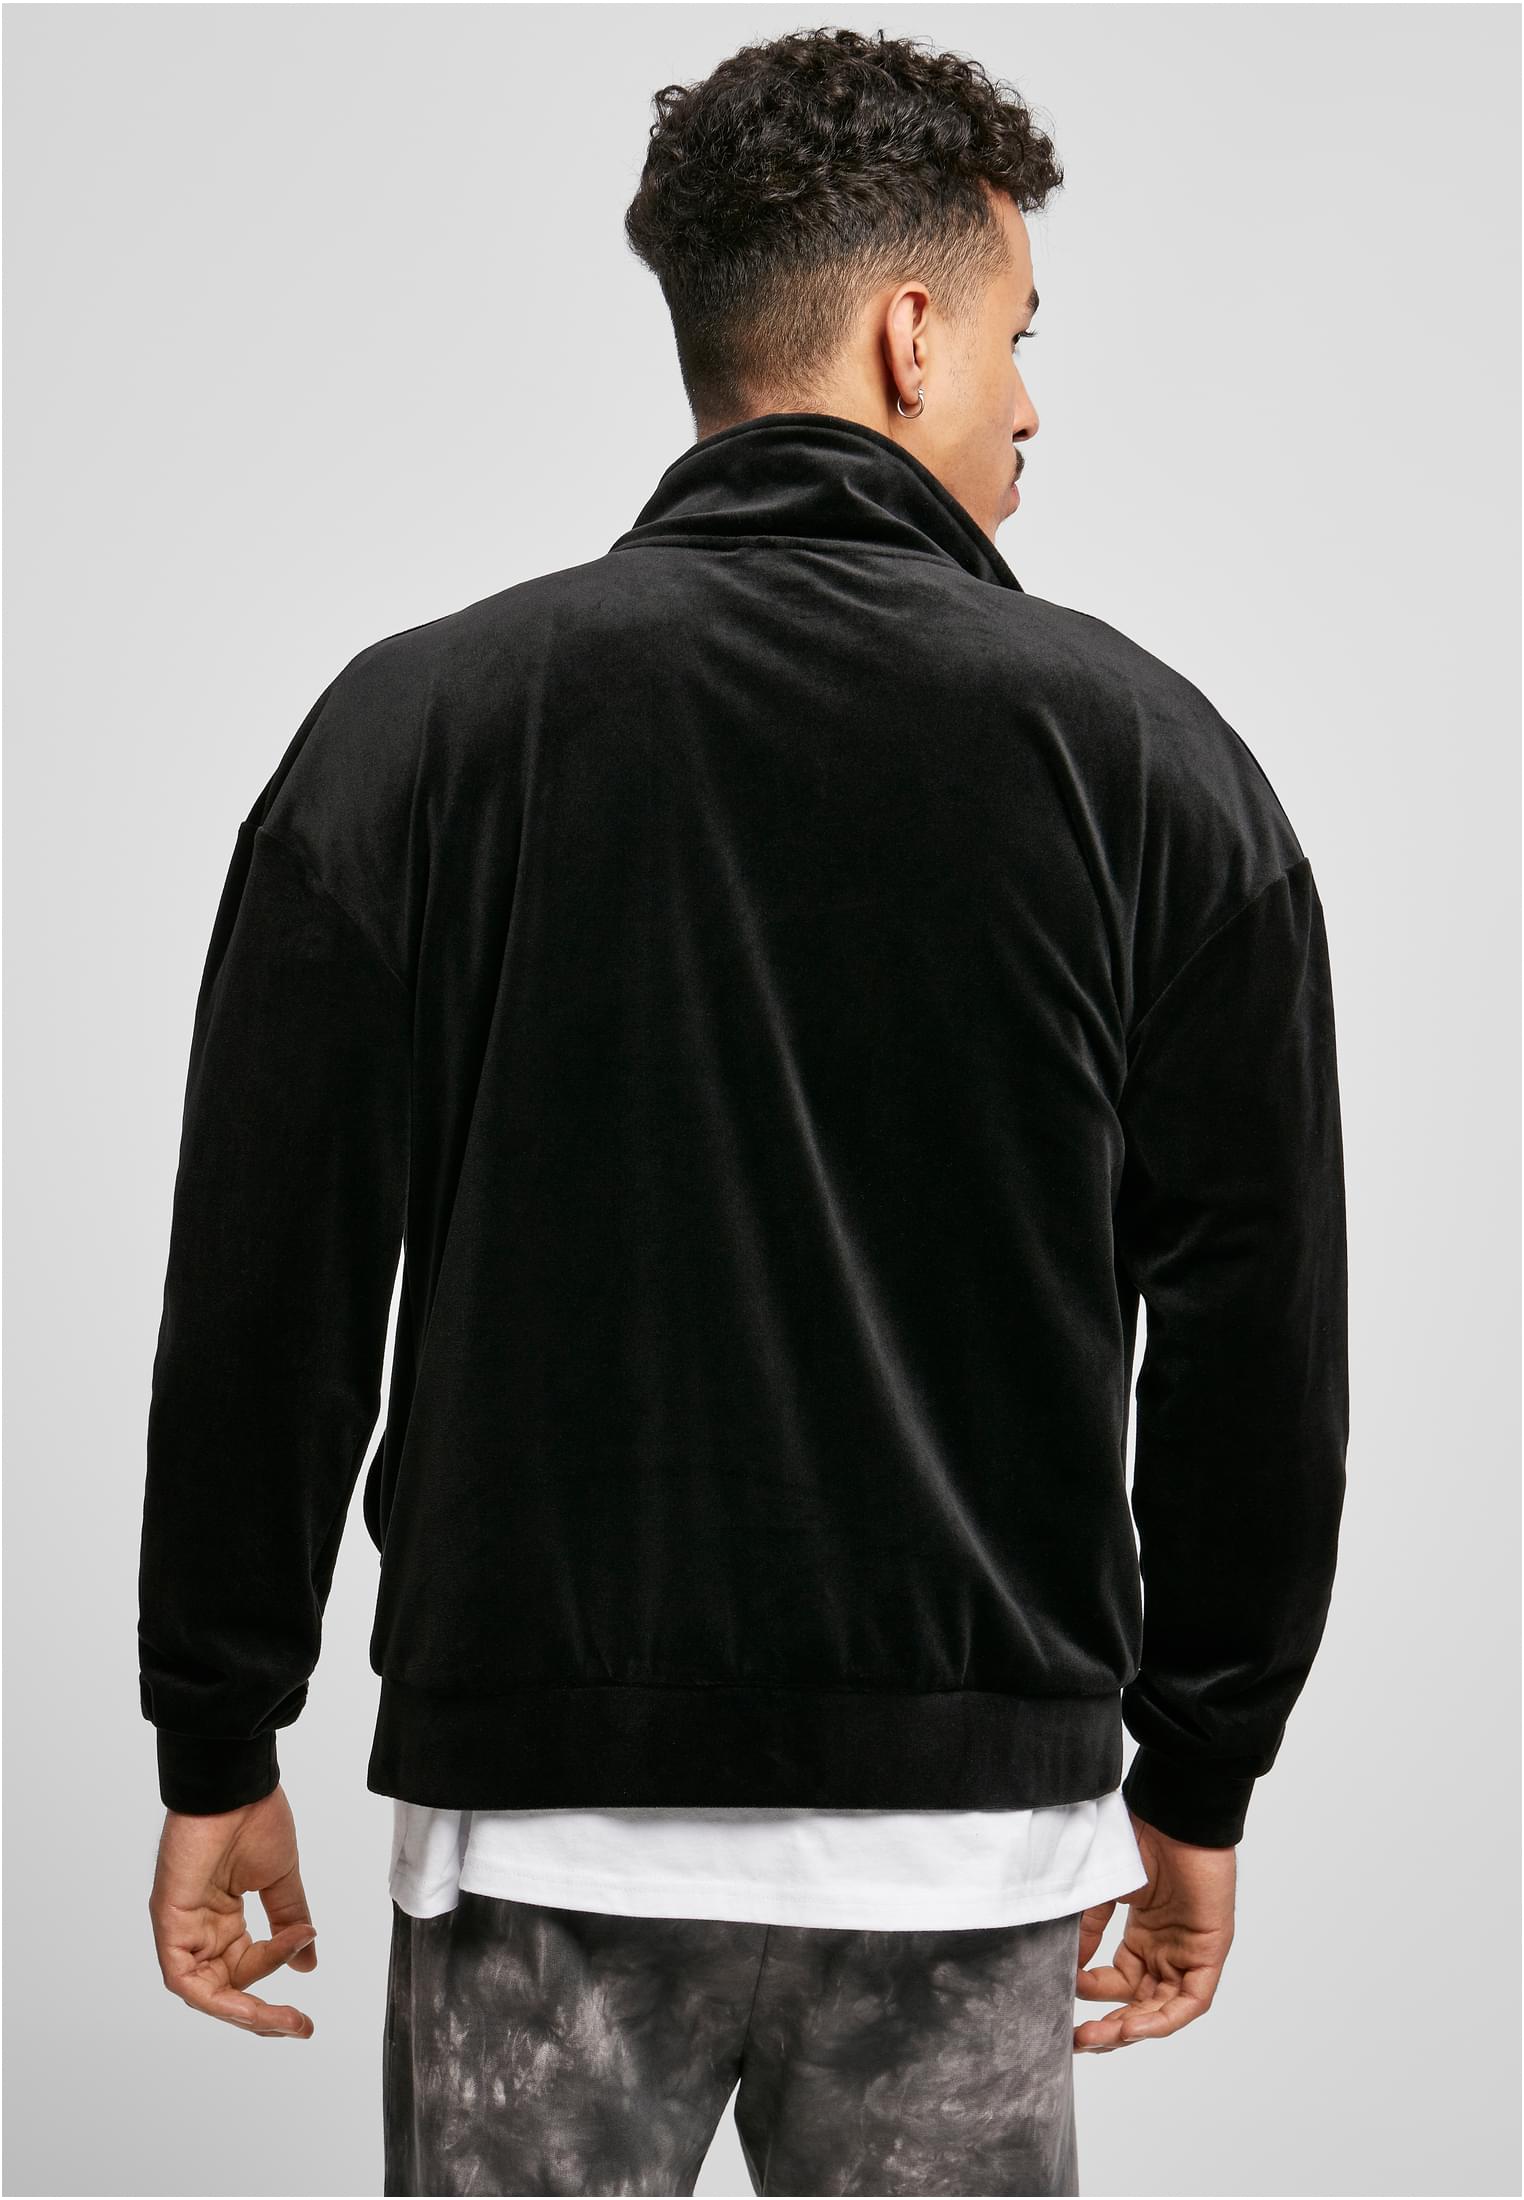 Leichte Jacken Velvet Jacket in Farbe black